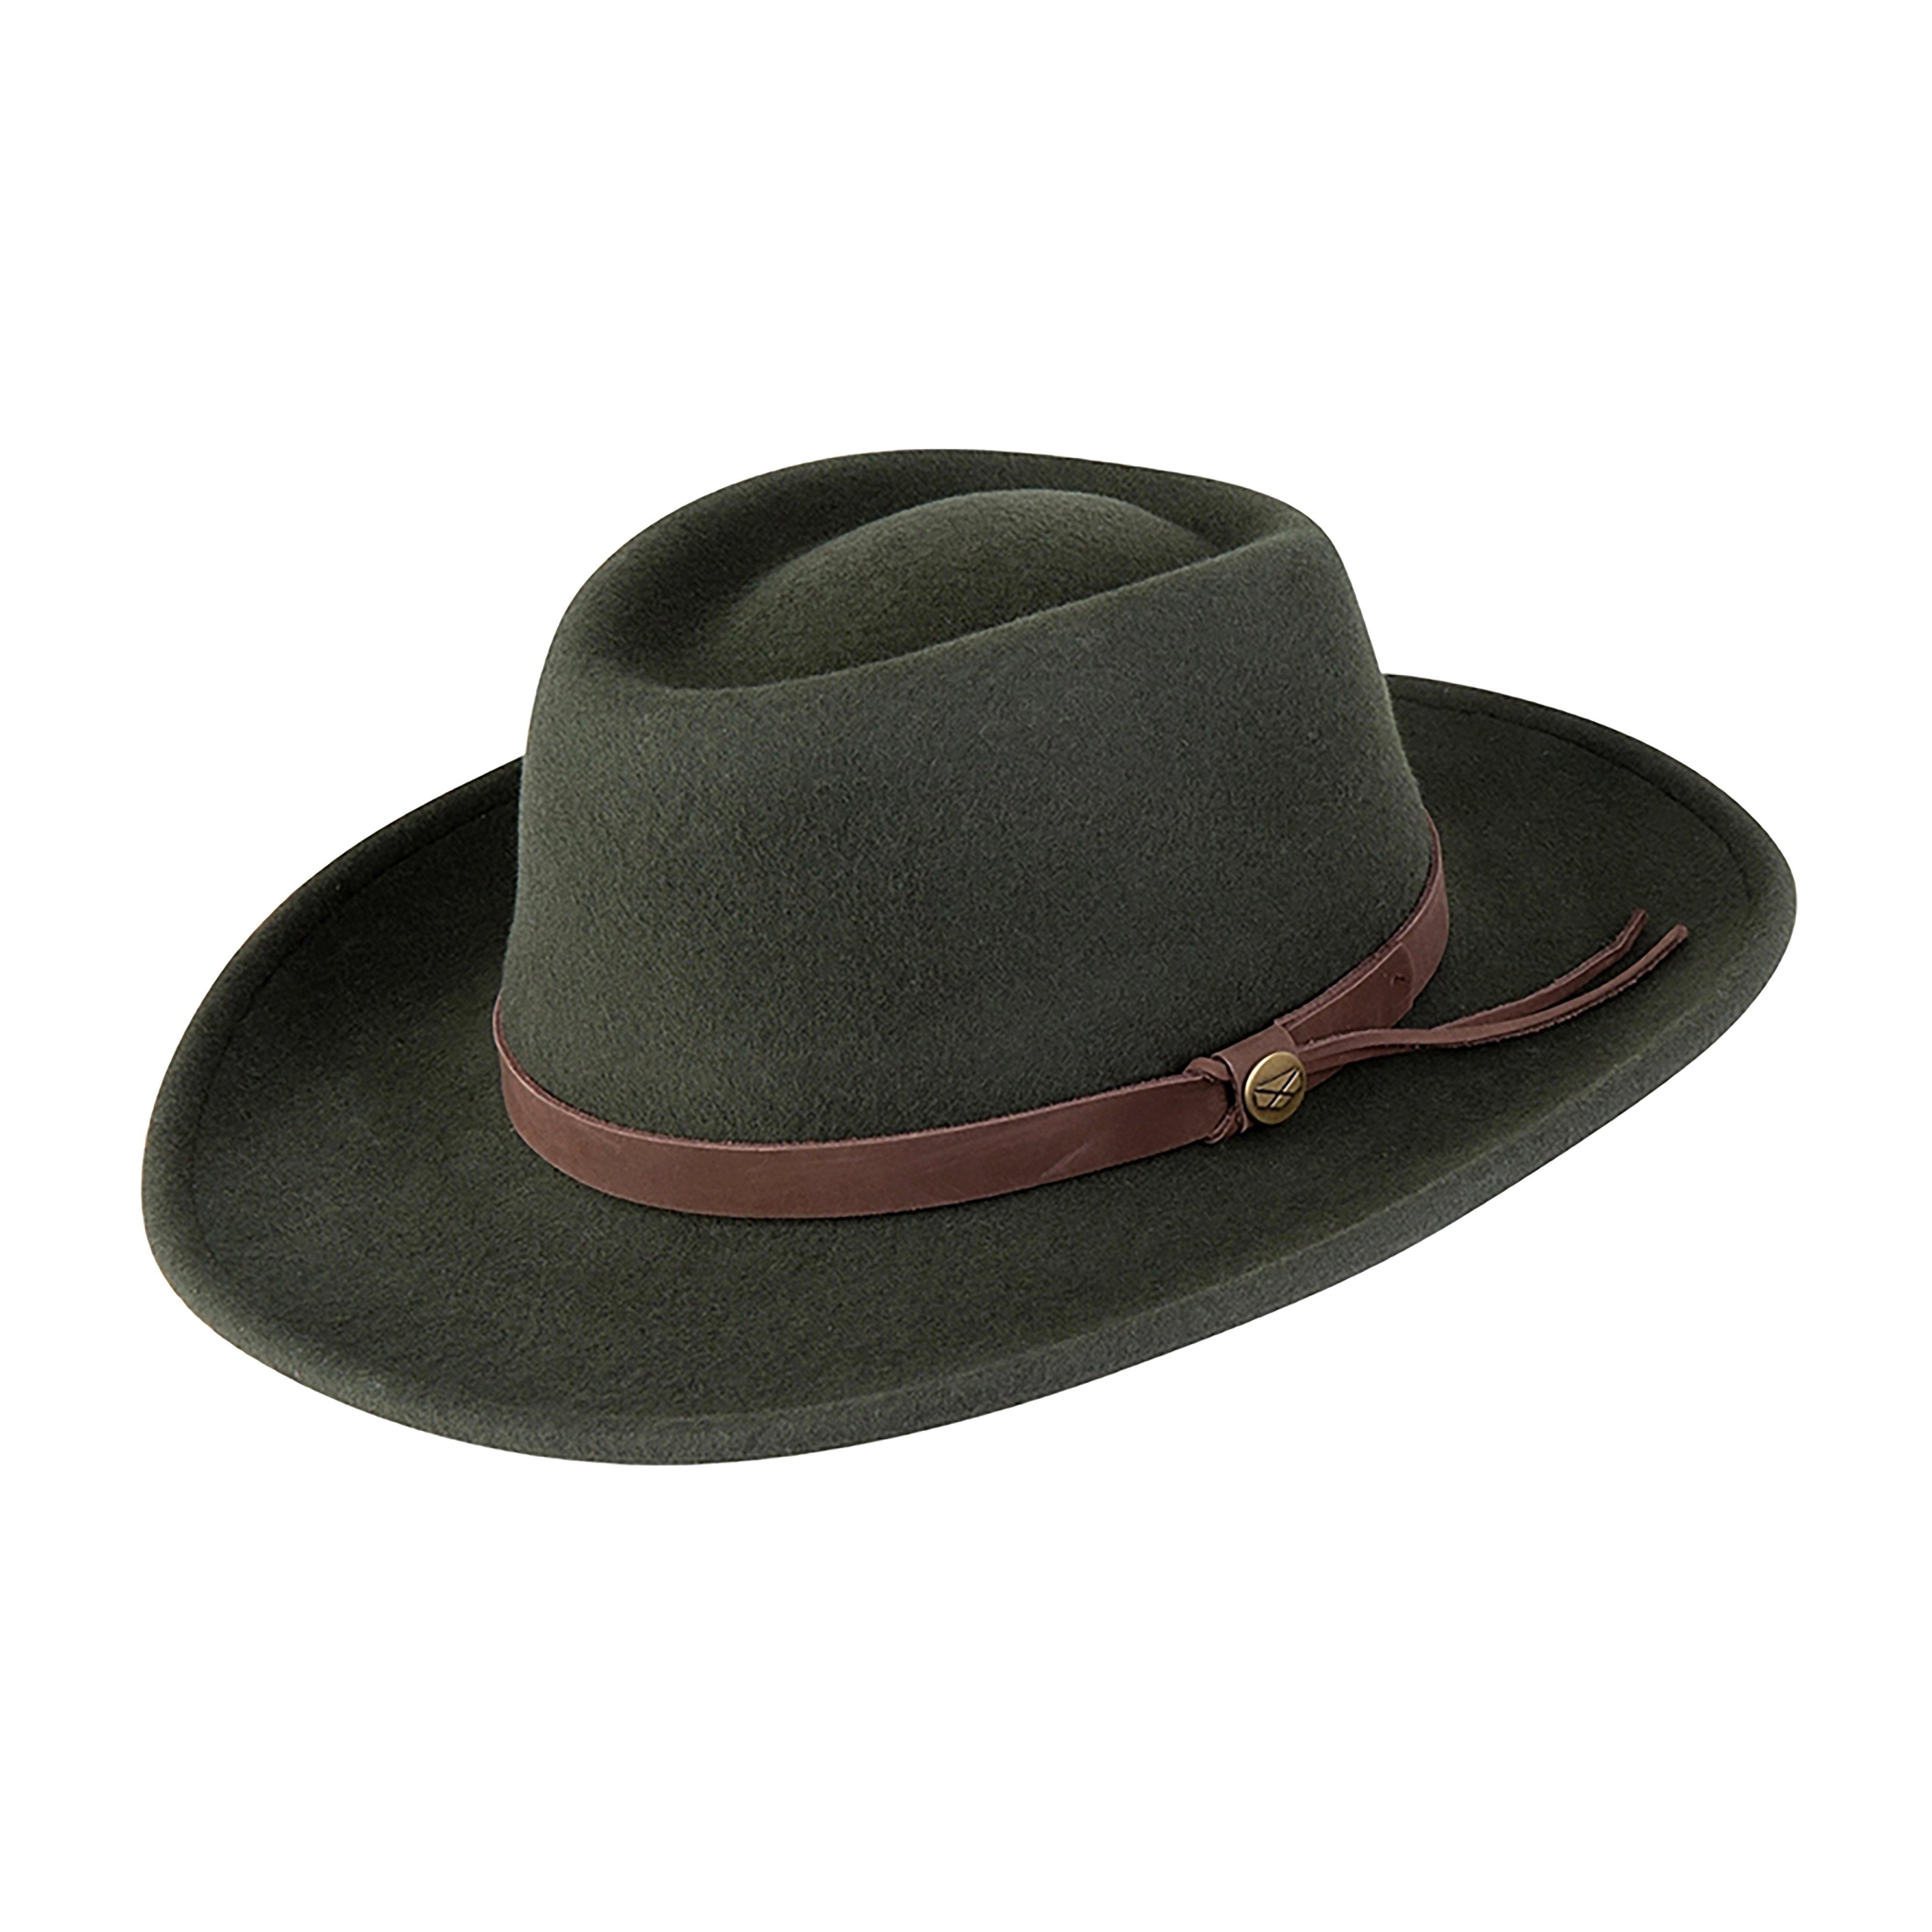 Perth Crushable Felt Hat Olive